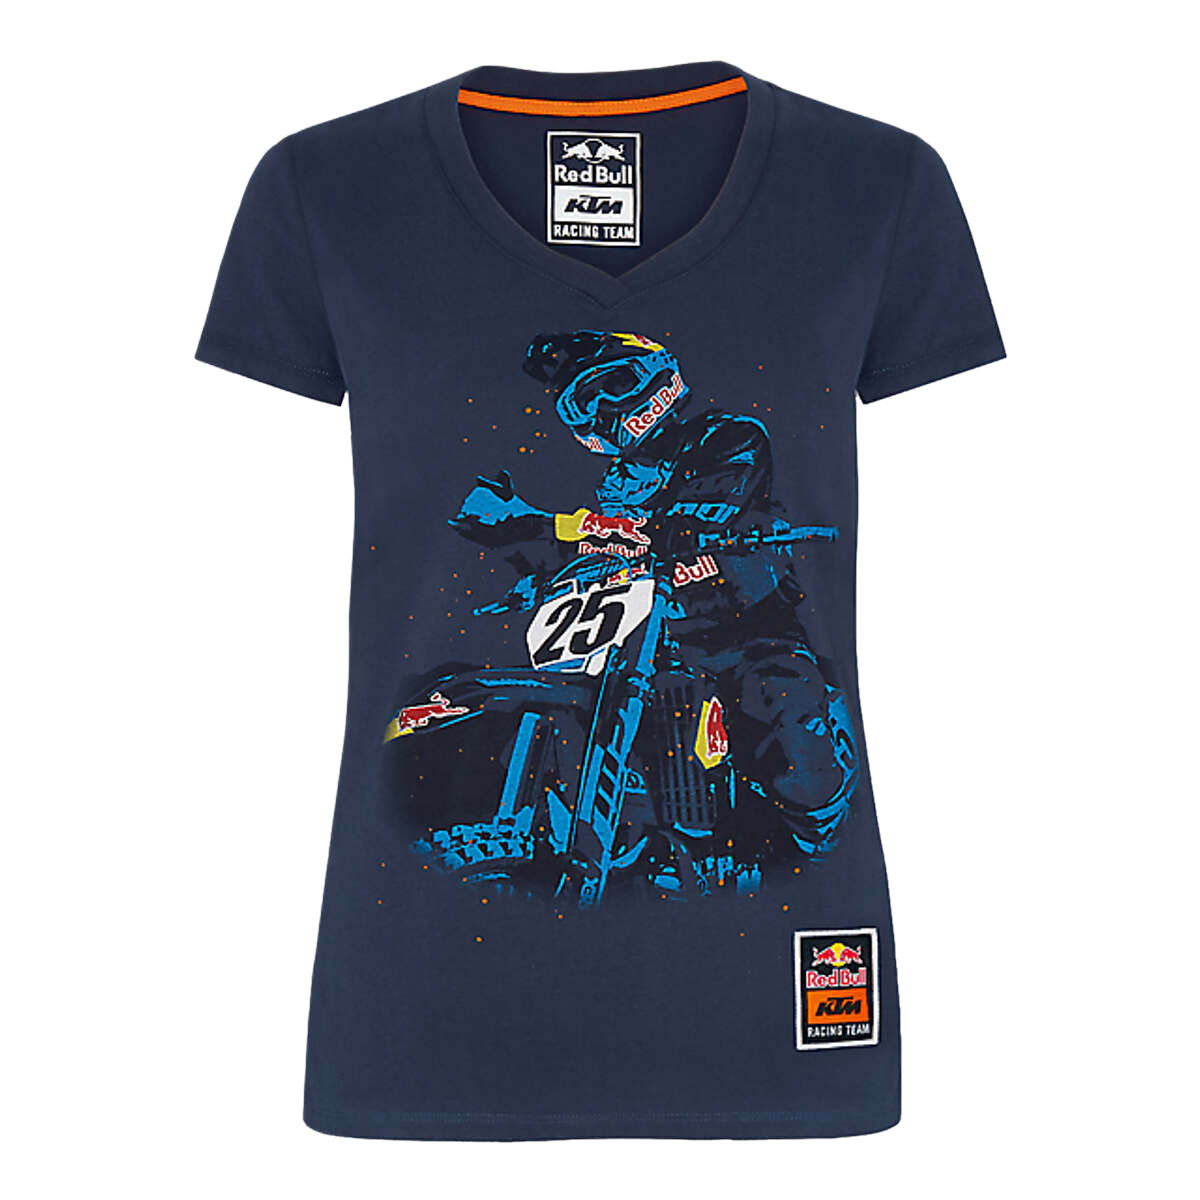 Red Bull Girls T-Shirt KTM Racing Team Musquin - Navy